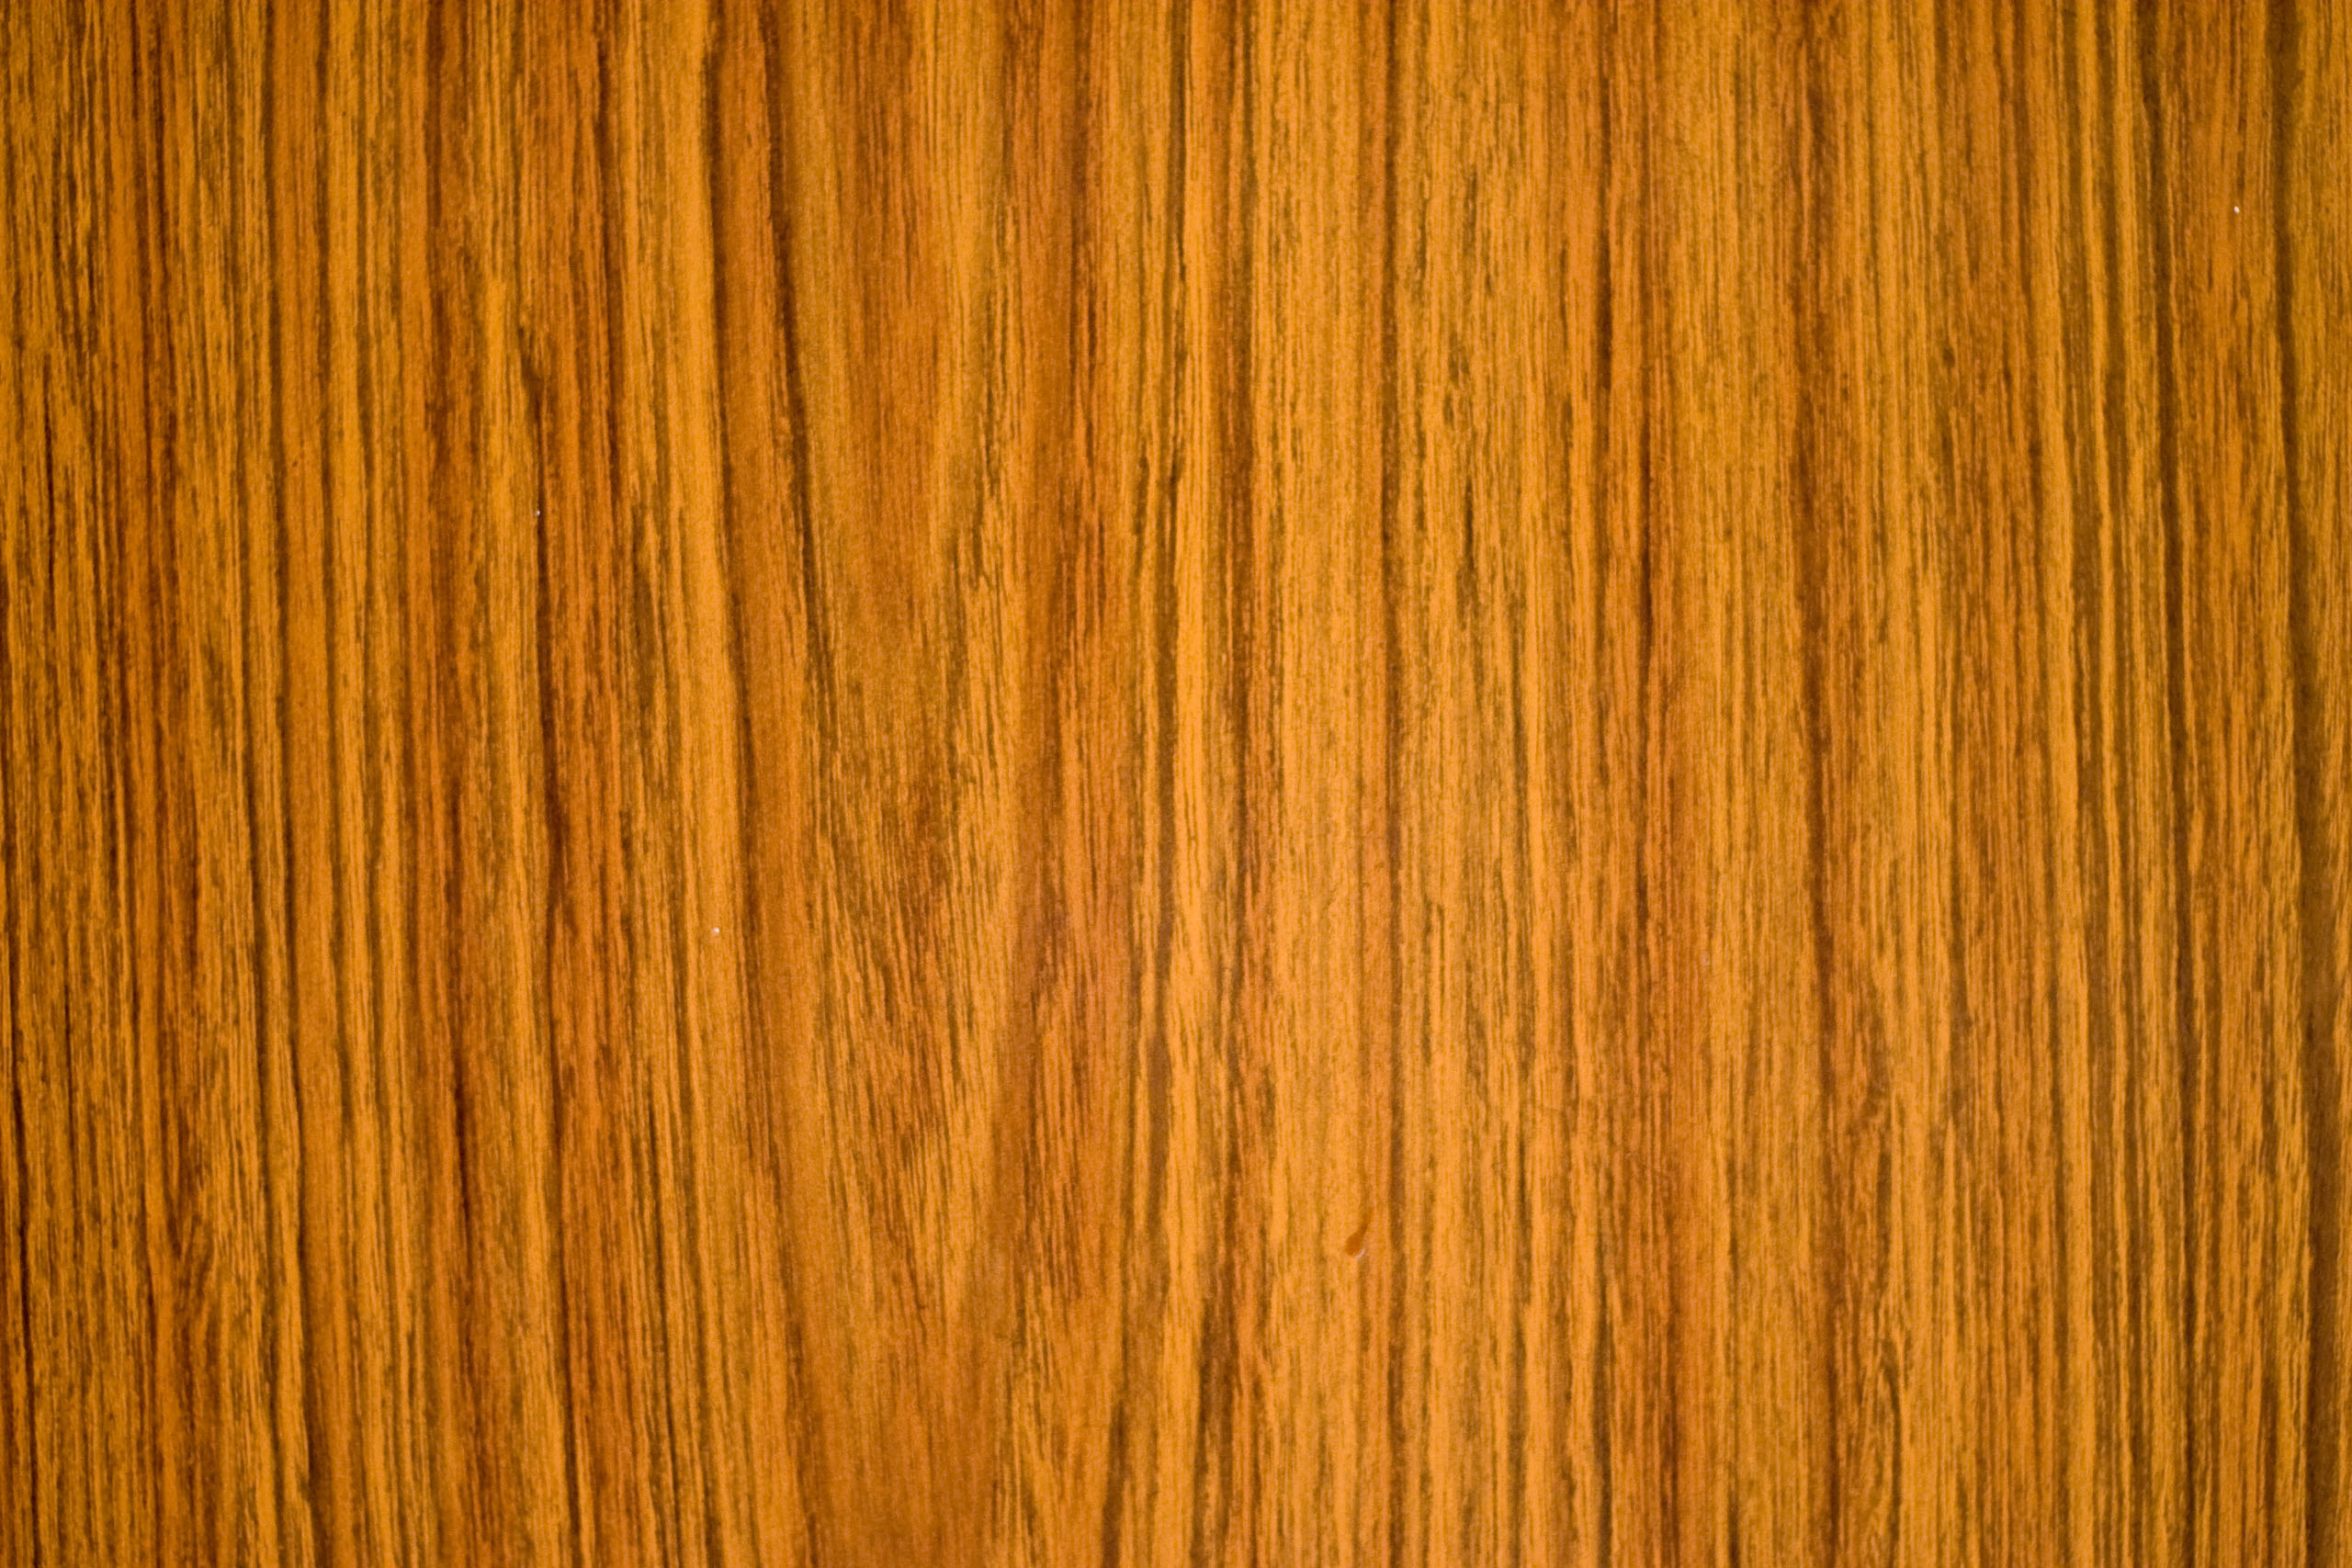 Wood Grain HD Wallpaper.